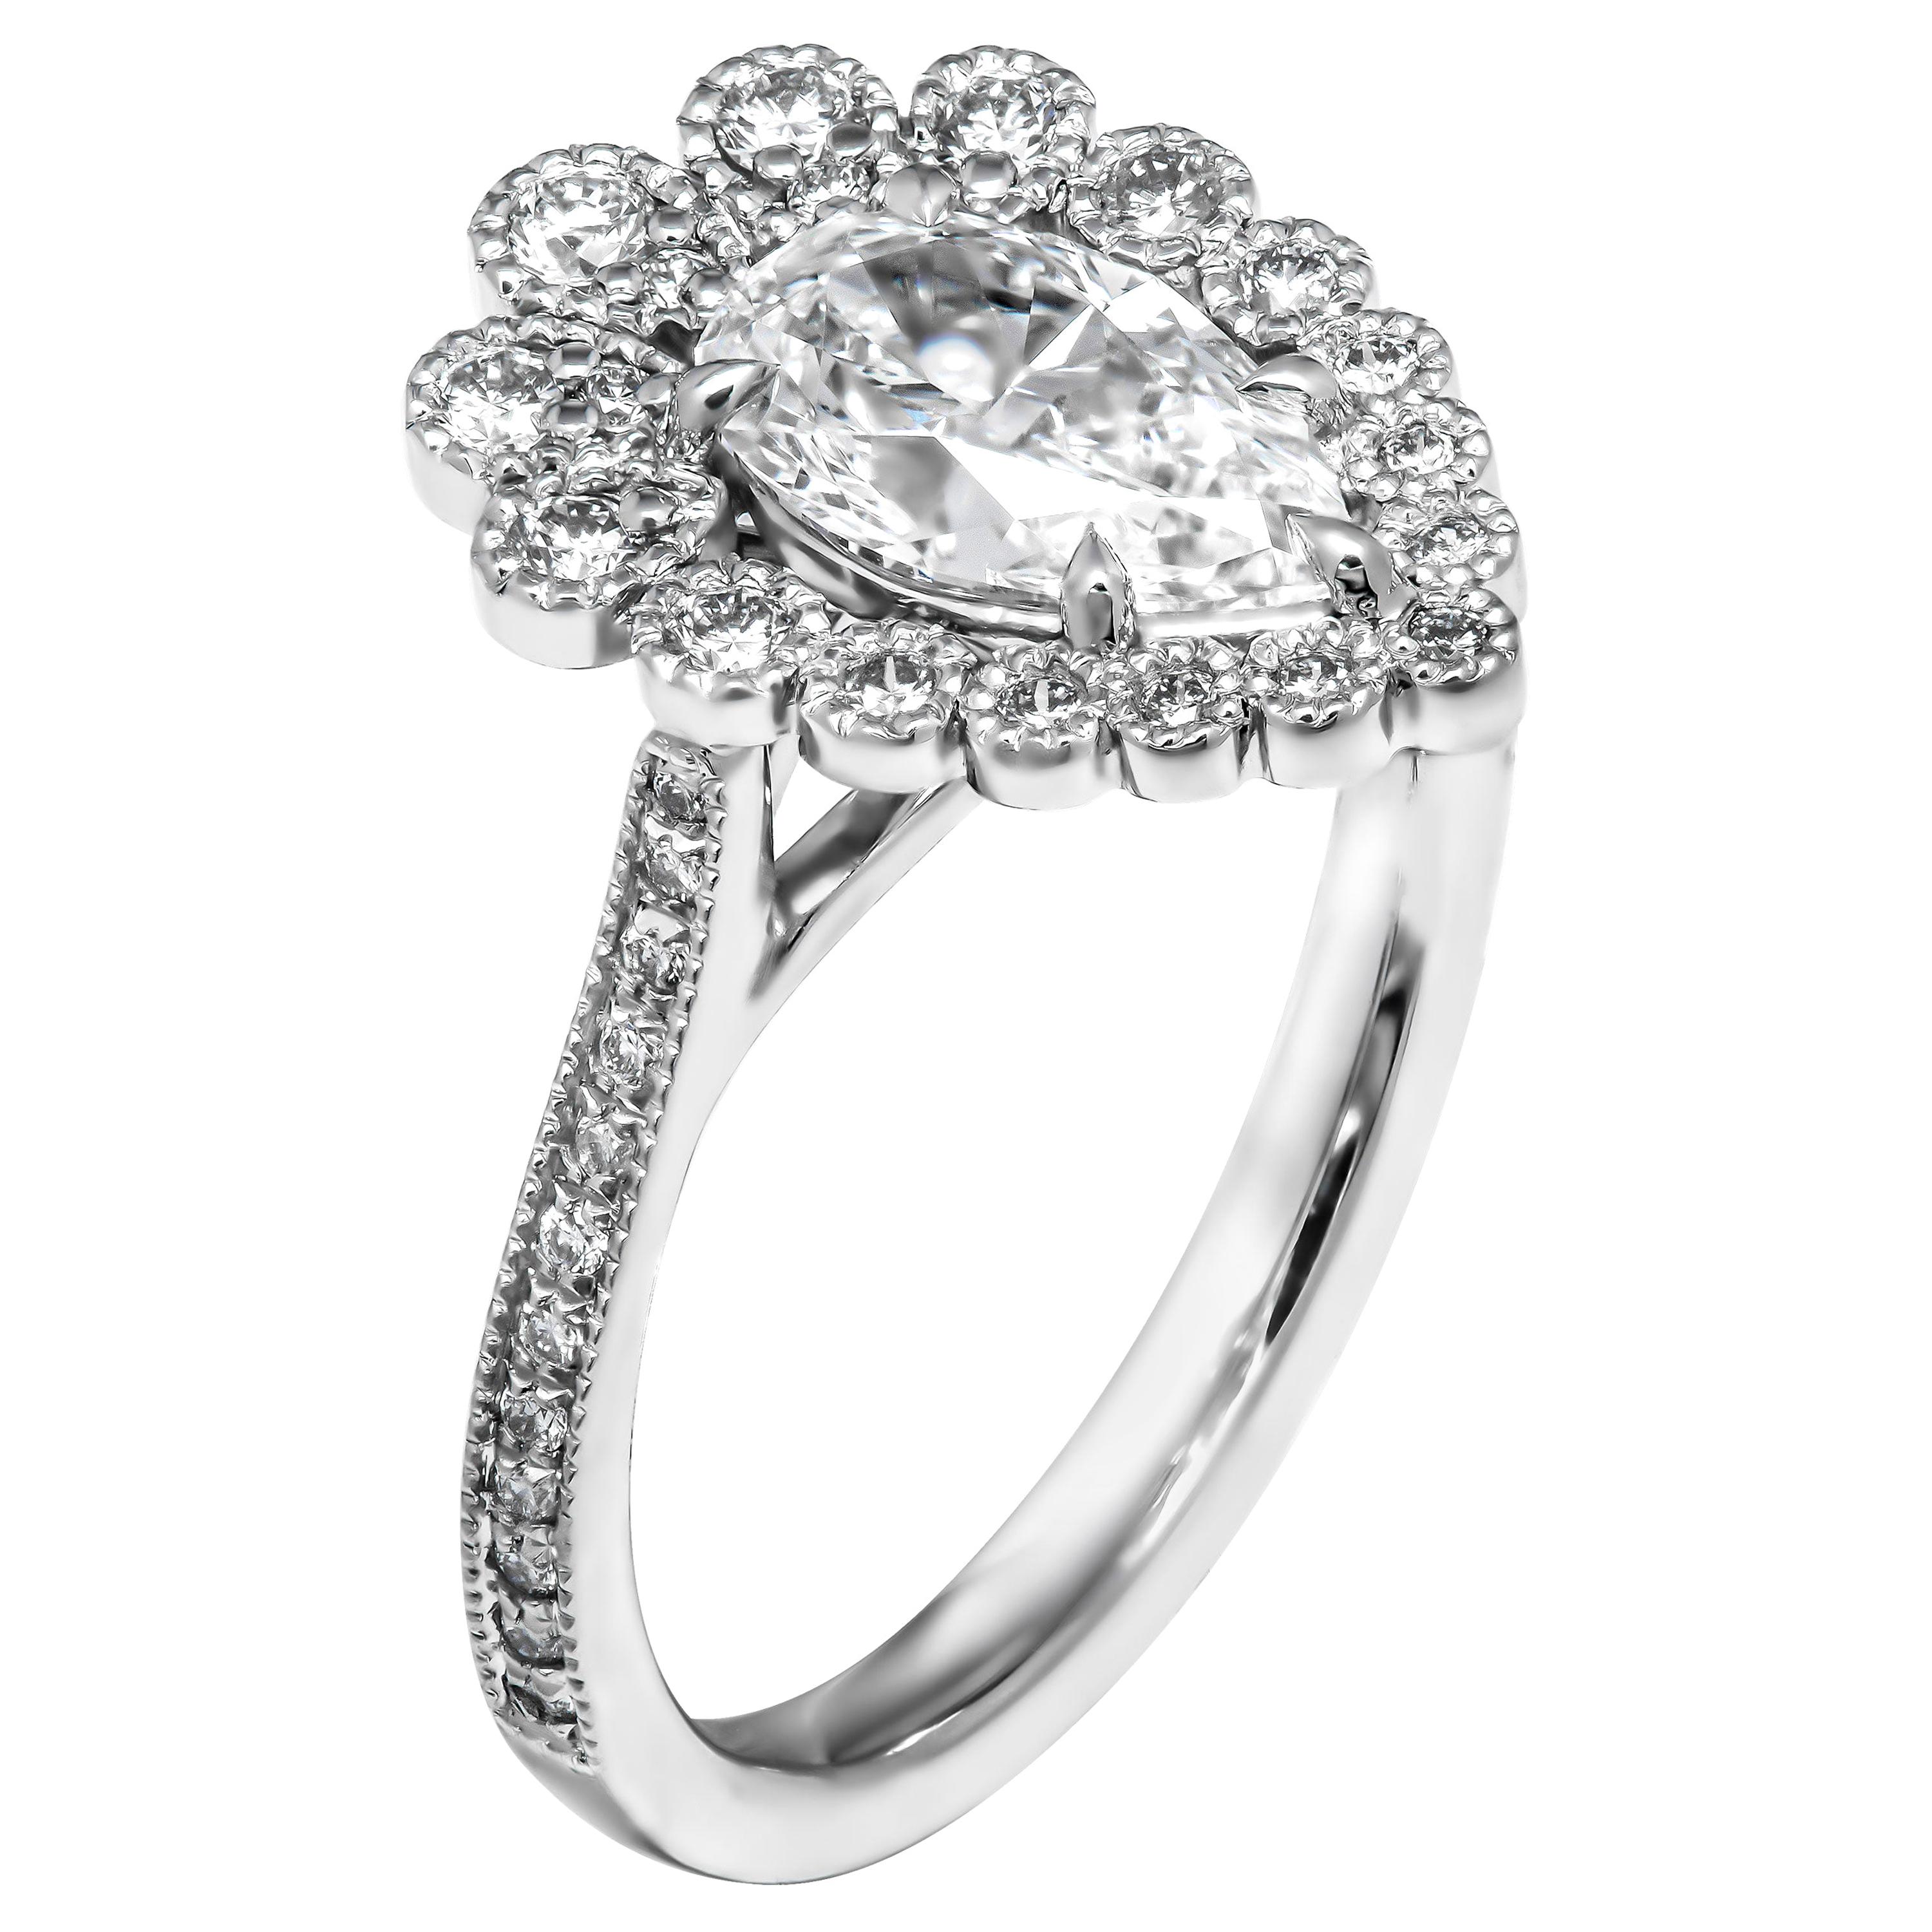 GIA Certified 1.01 Carat Pear Shape Diamond Engagement Ring